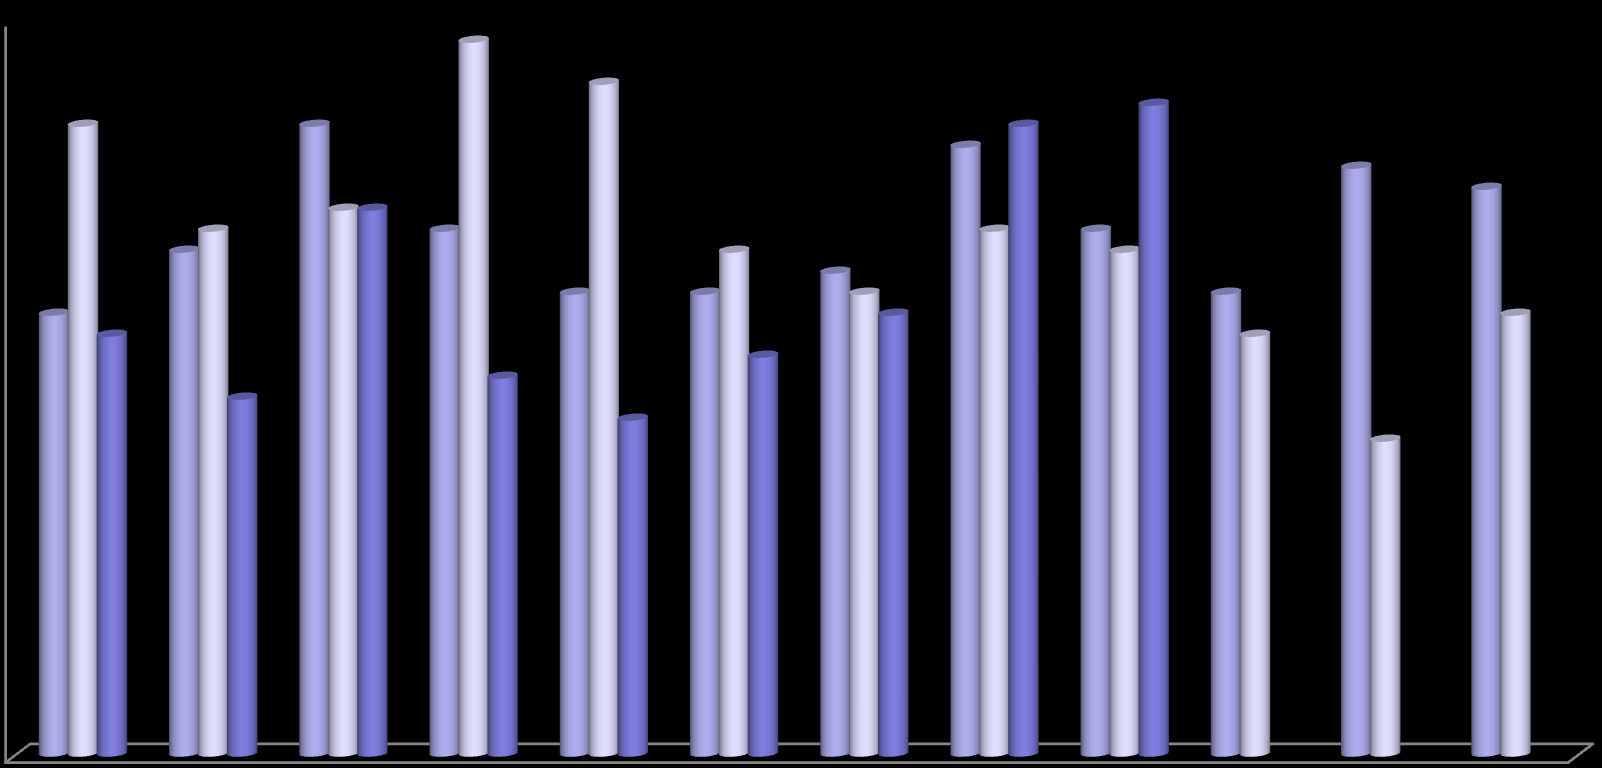 Antall fartøyer med petroleumslast, fra og med 01.01.2012 til og med 30.09.